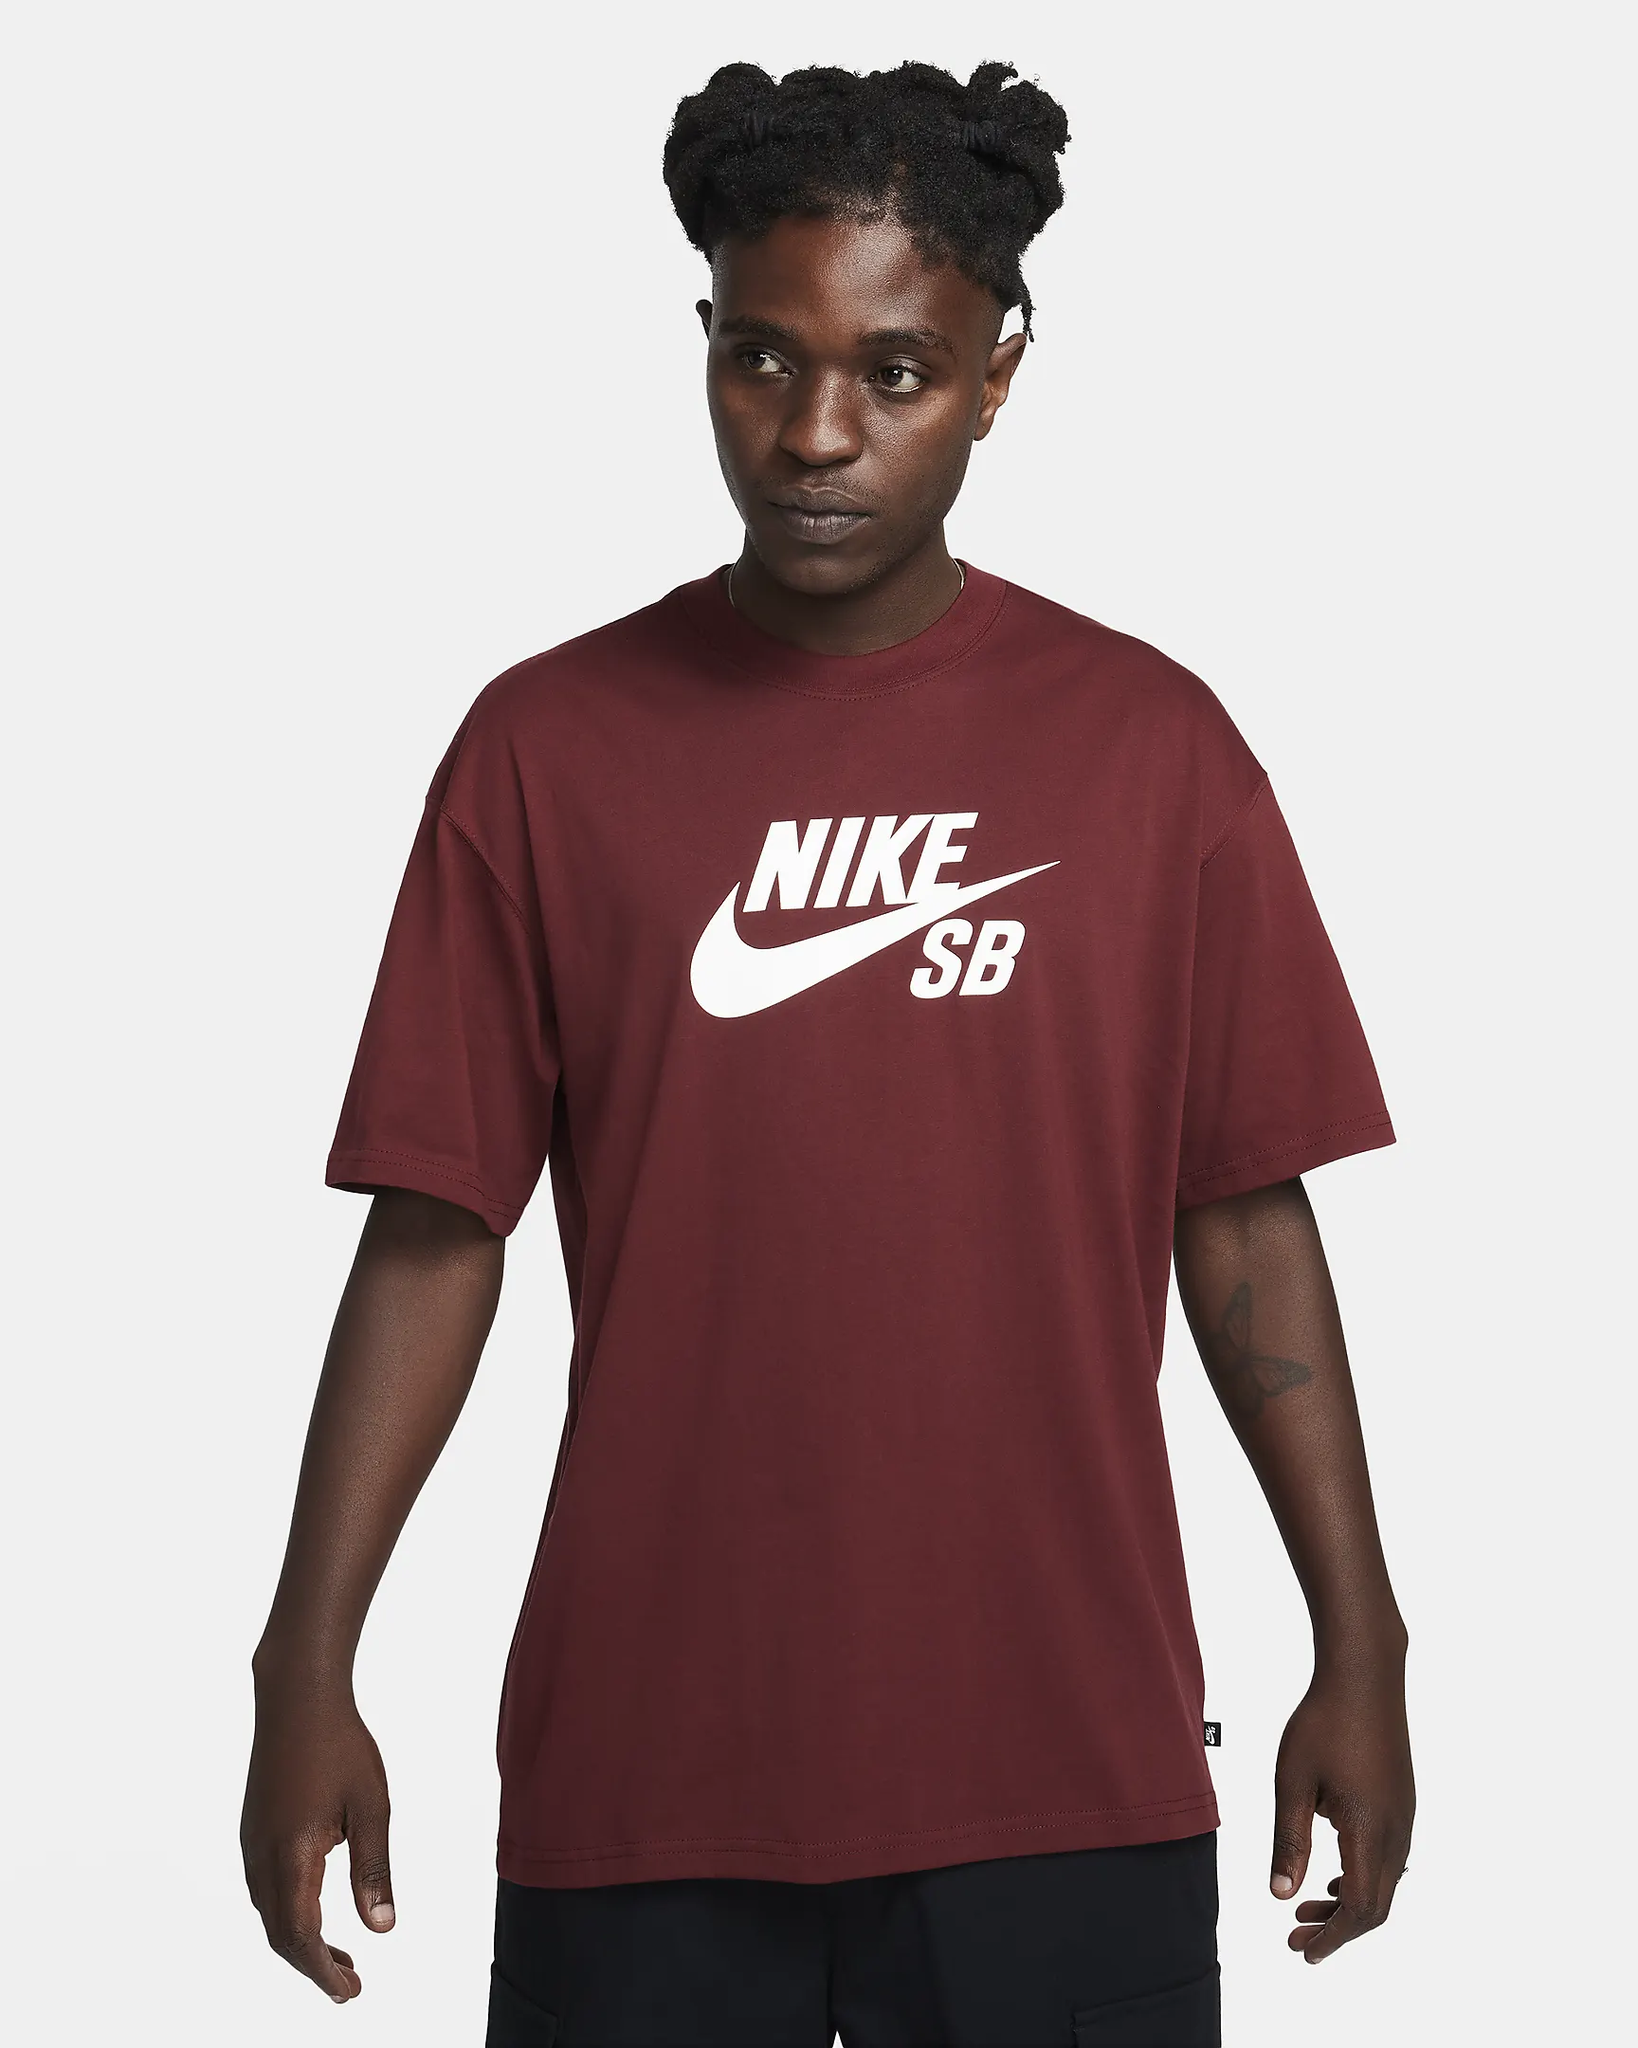 Nike SB SB LOGO DARK TEAM RED